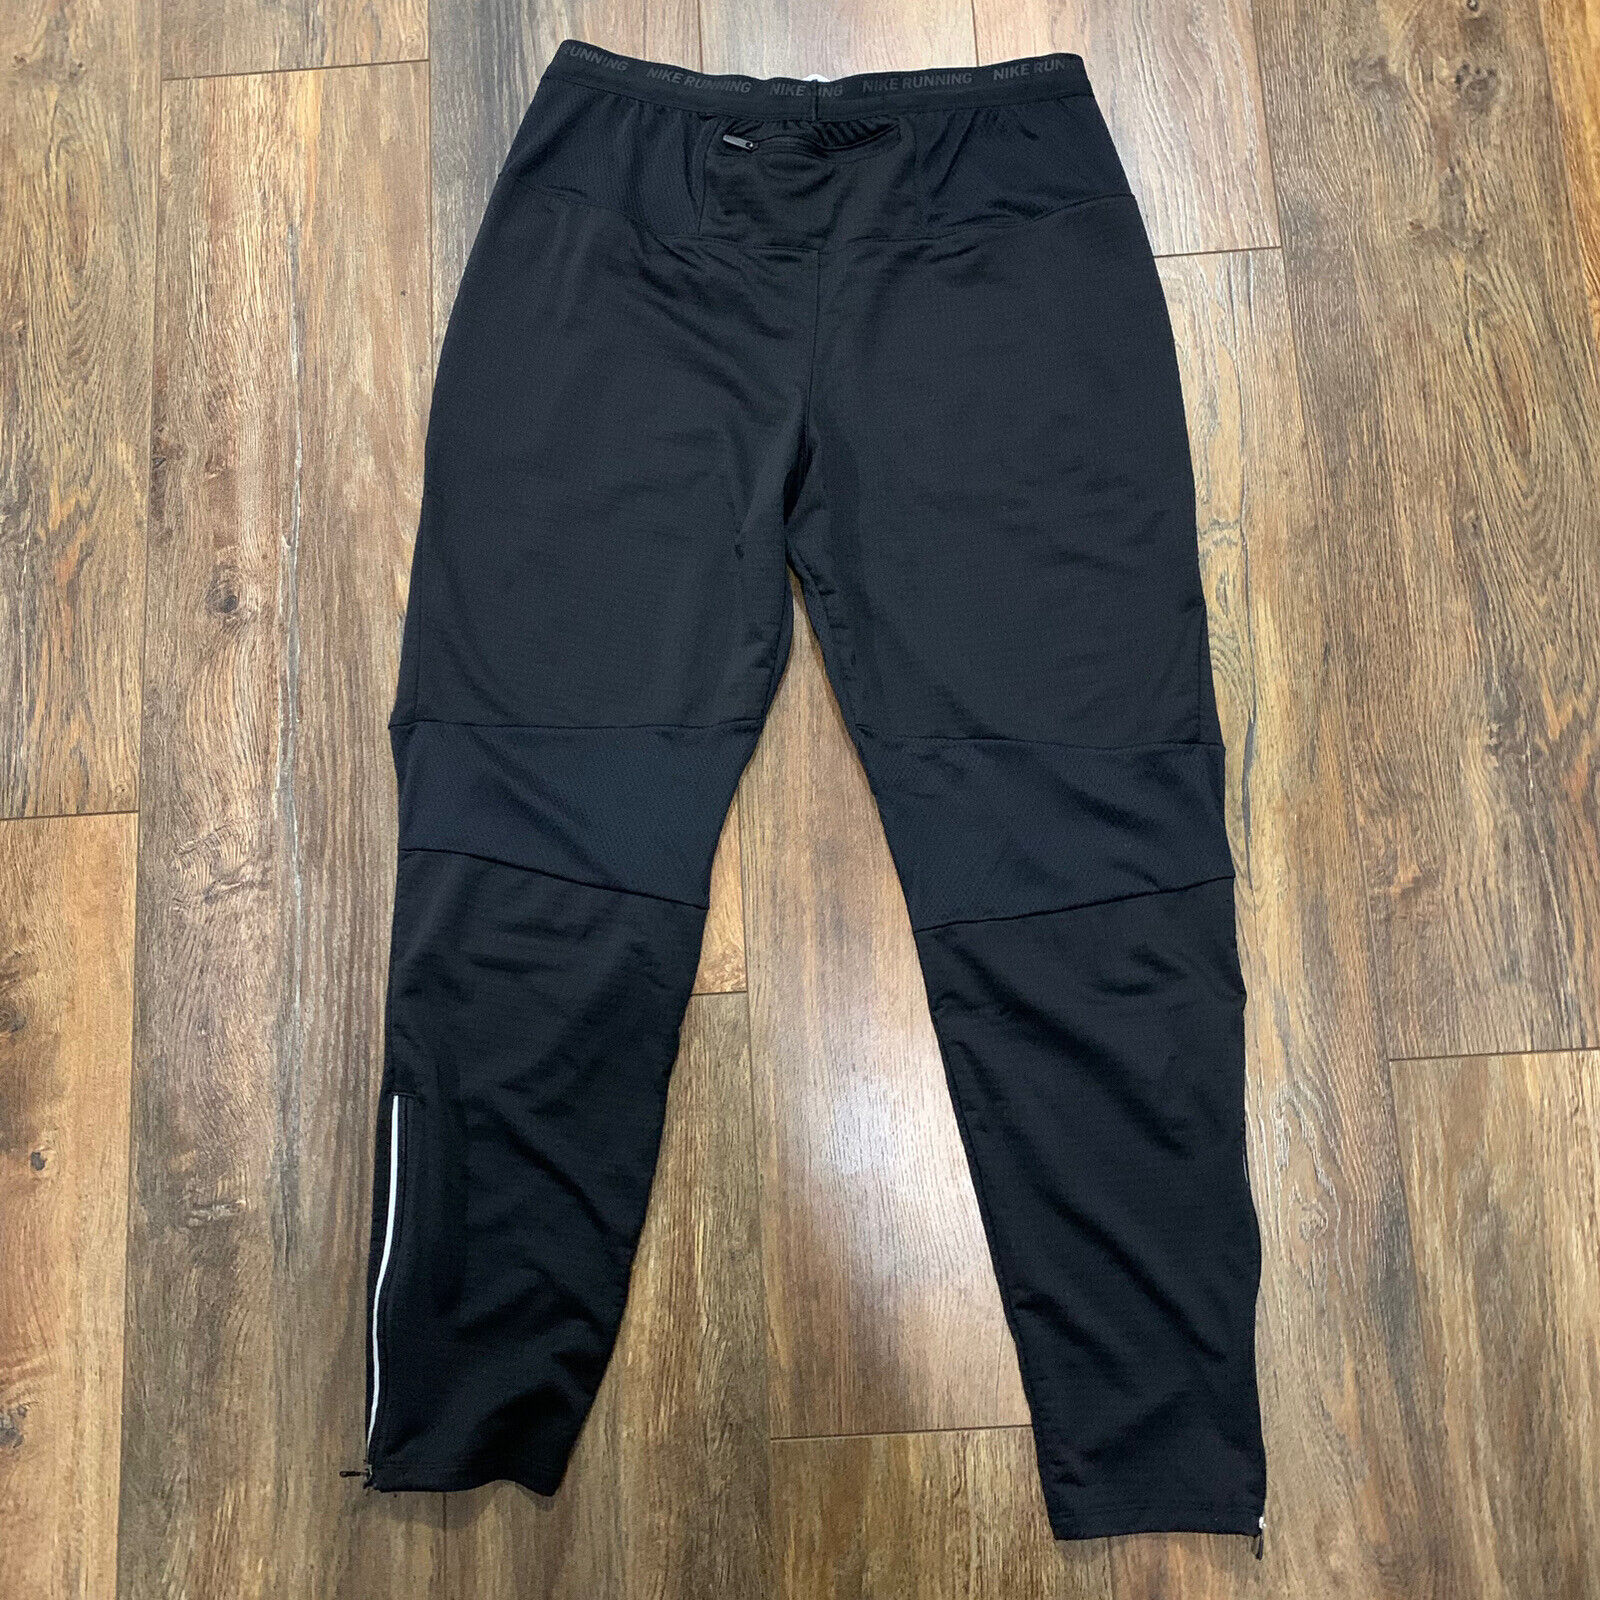 Nike Dri-Fit Phenom Elite Knit Running Pants Black DQ4740-010 Men’s | eBay